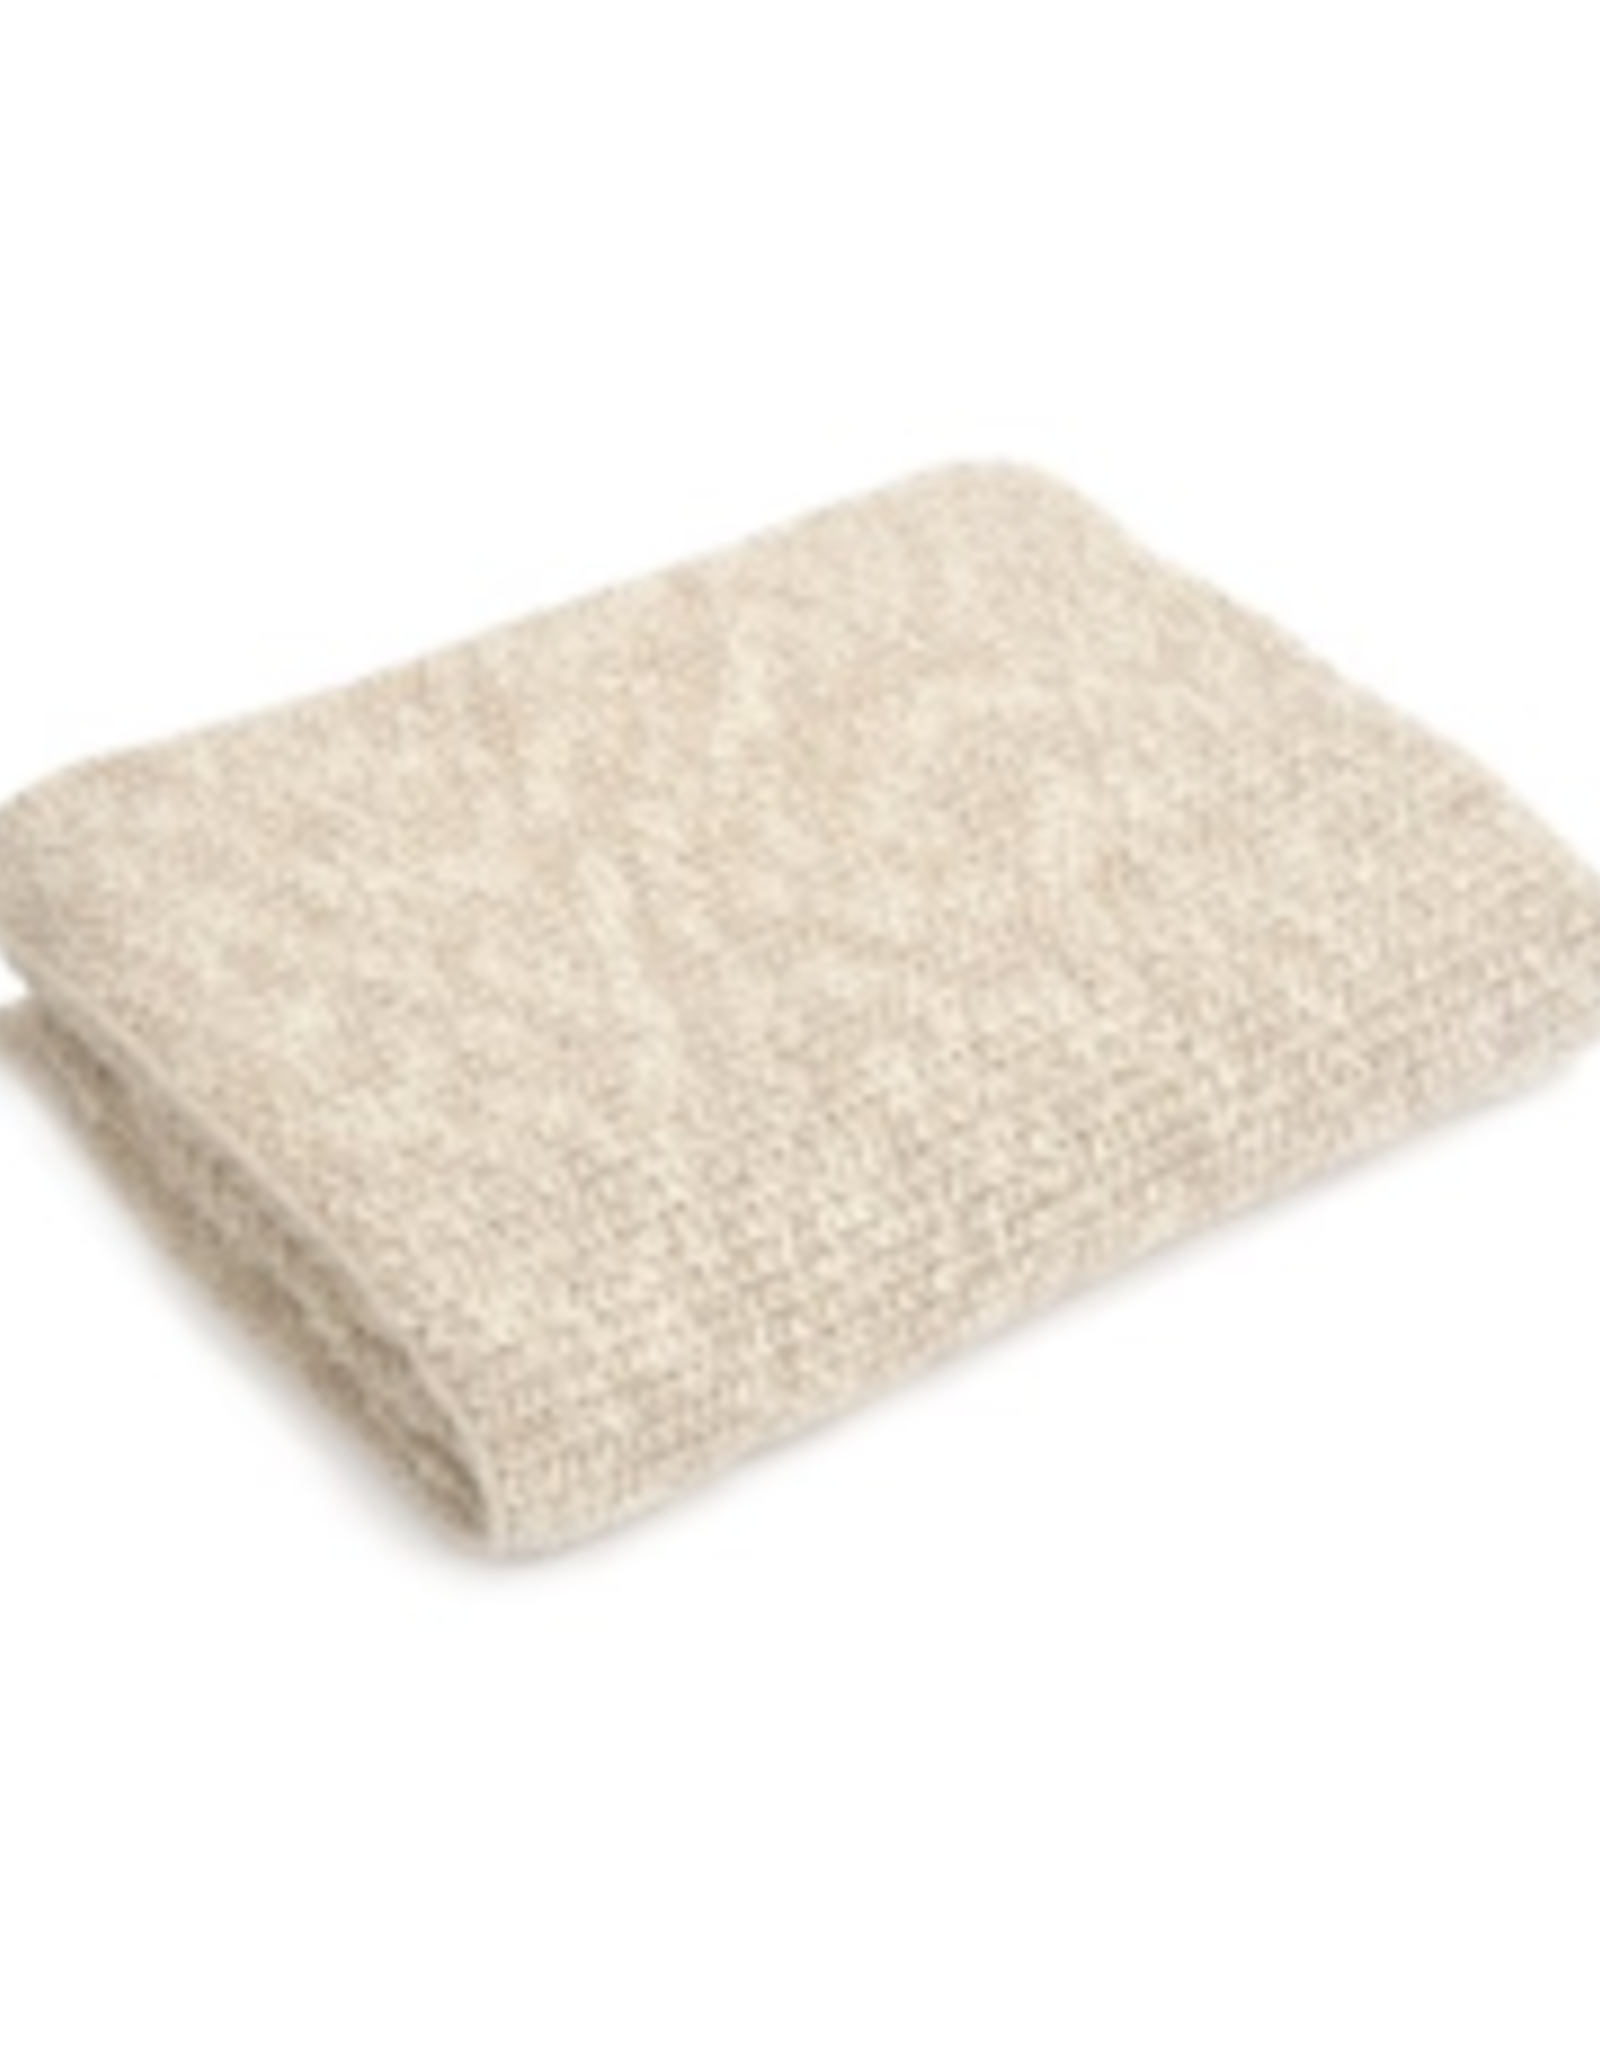 Rami Blush Cotton Blanket 50 x 60"